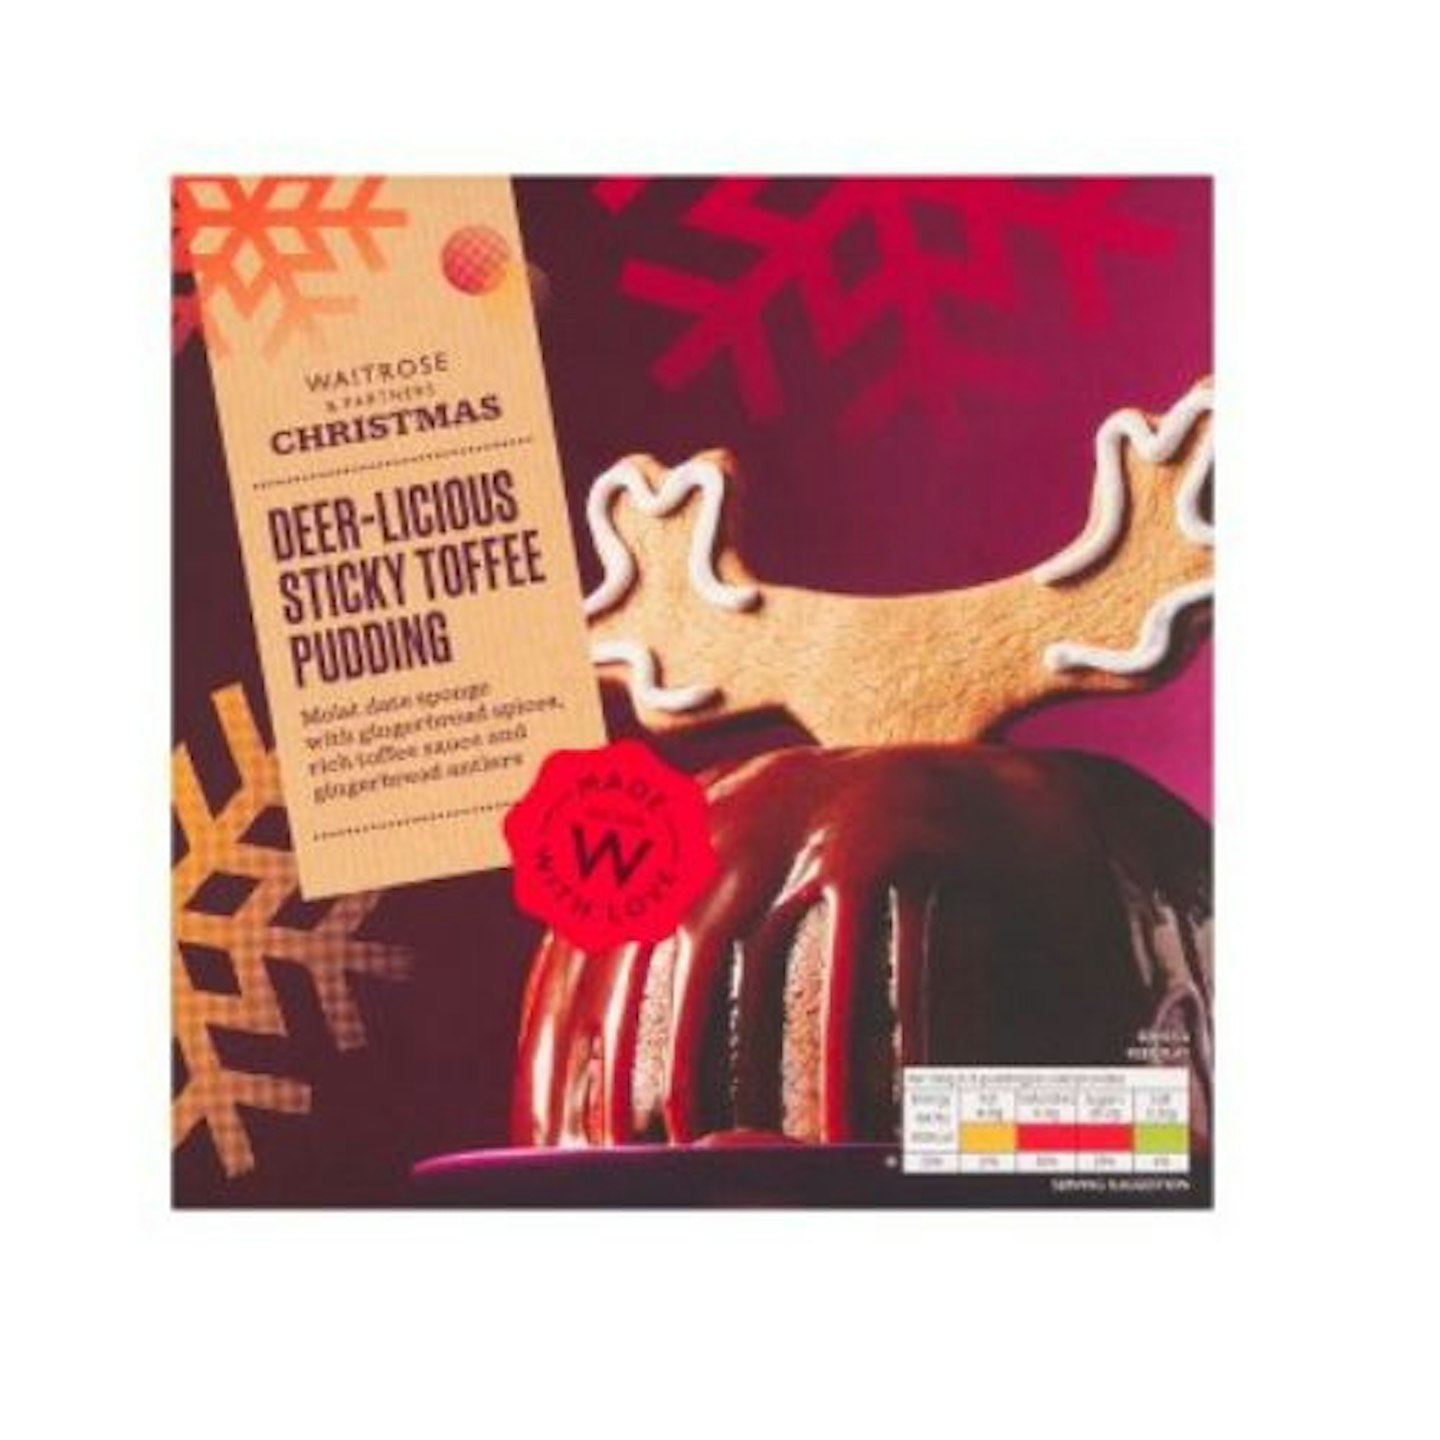 Waitrose Christmas Deer-Licious Sticky Toffee Pudding